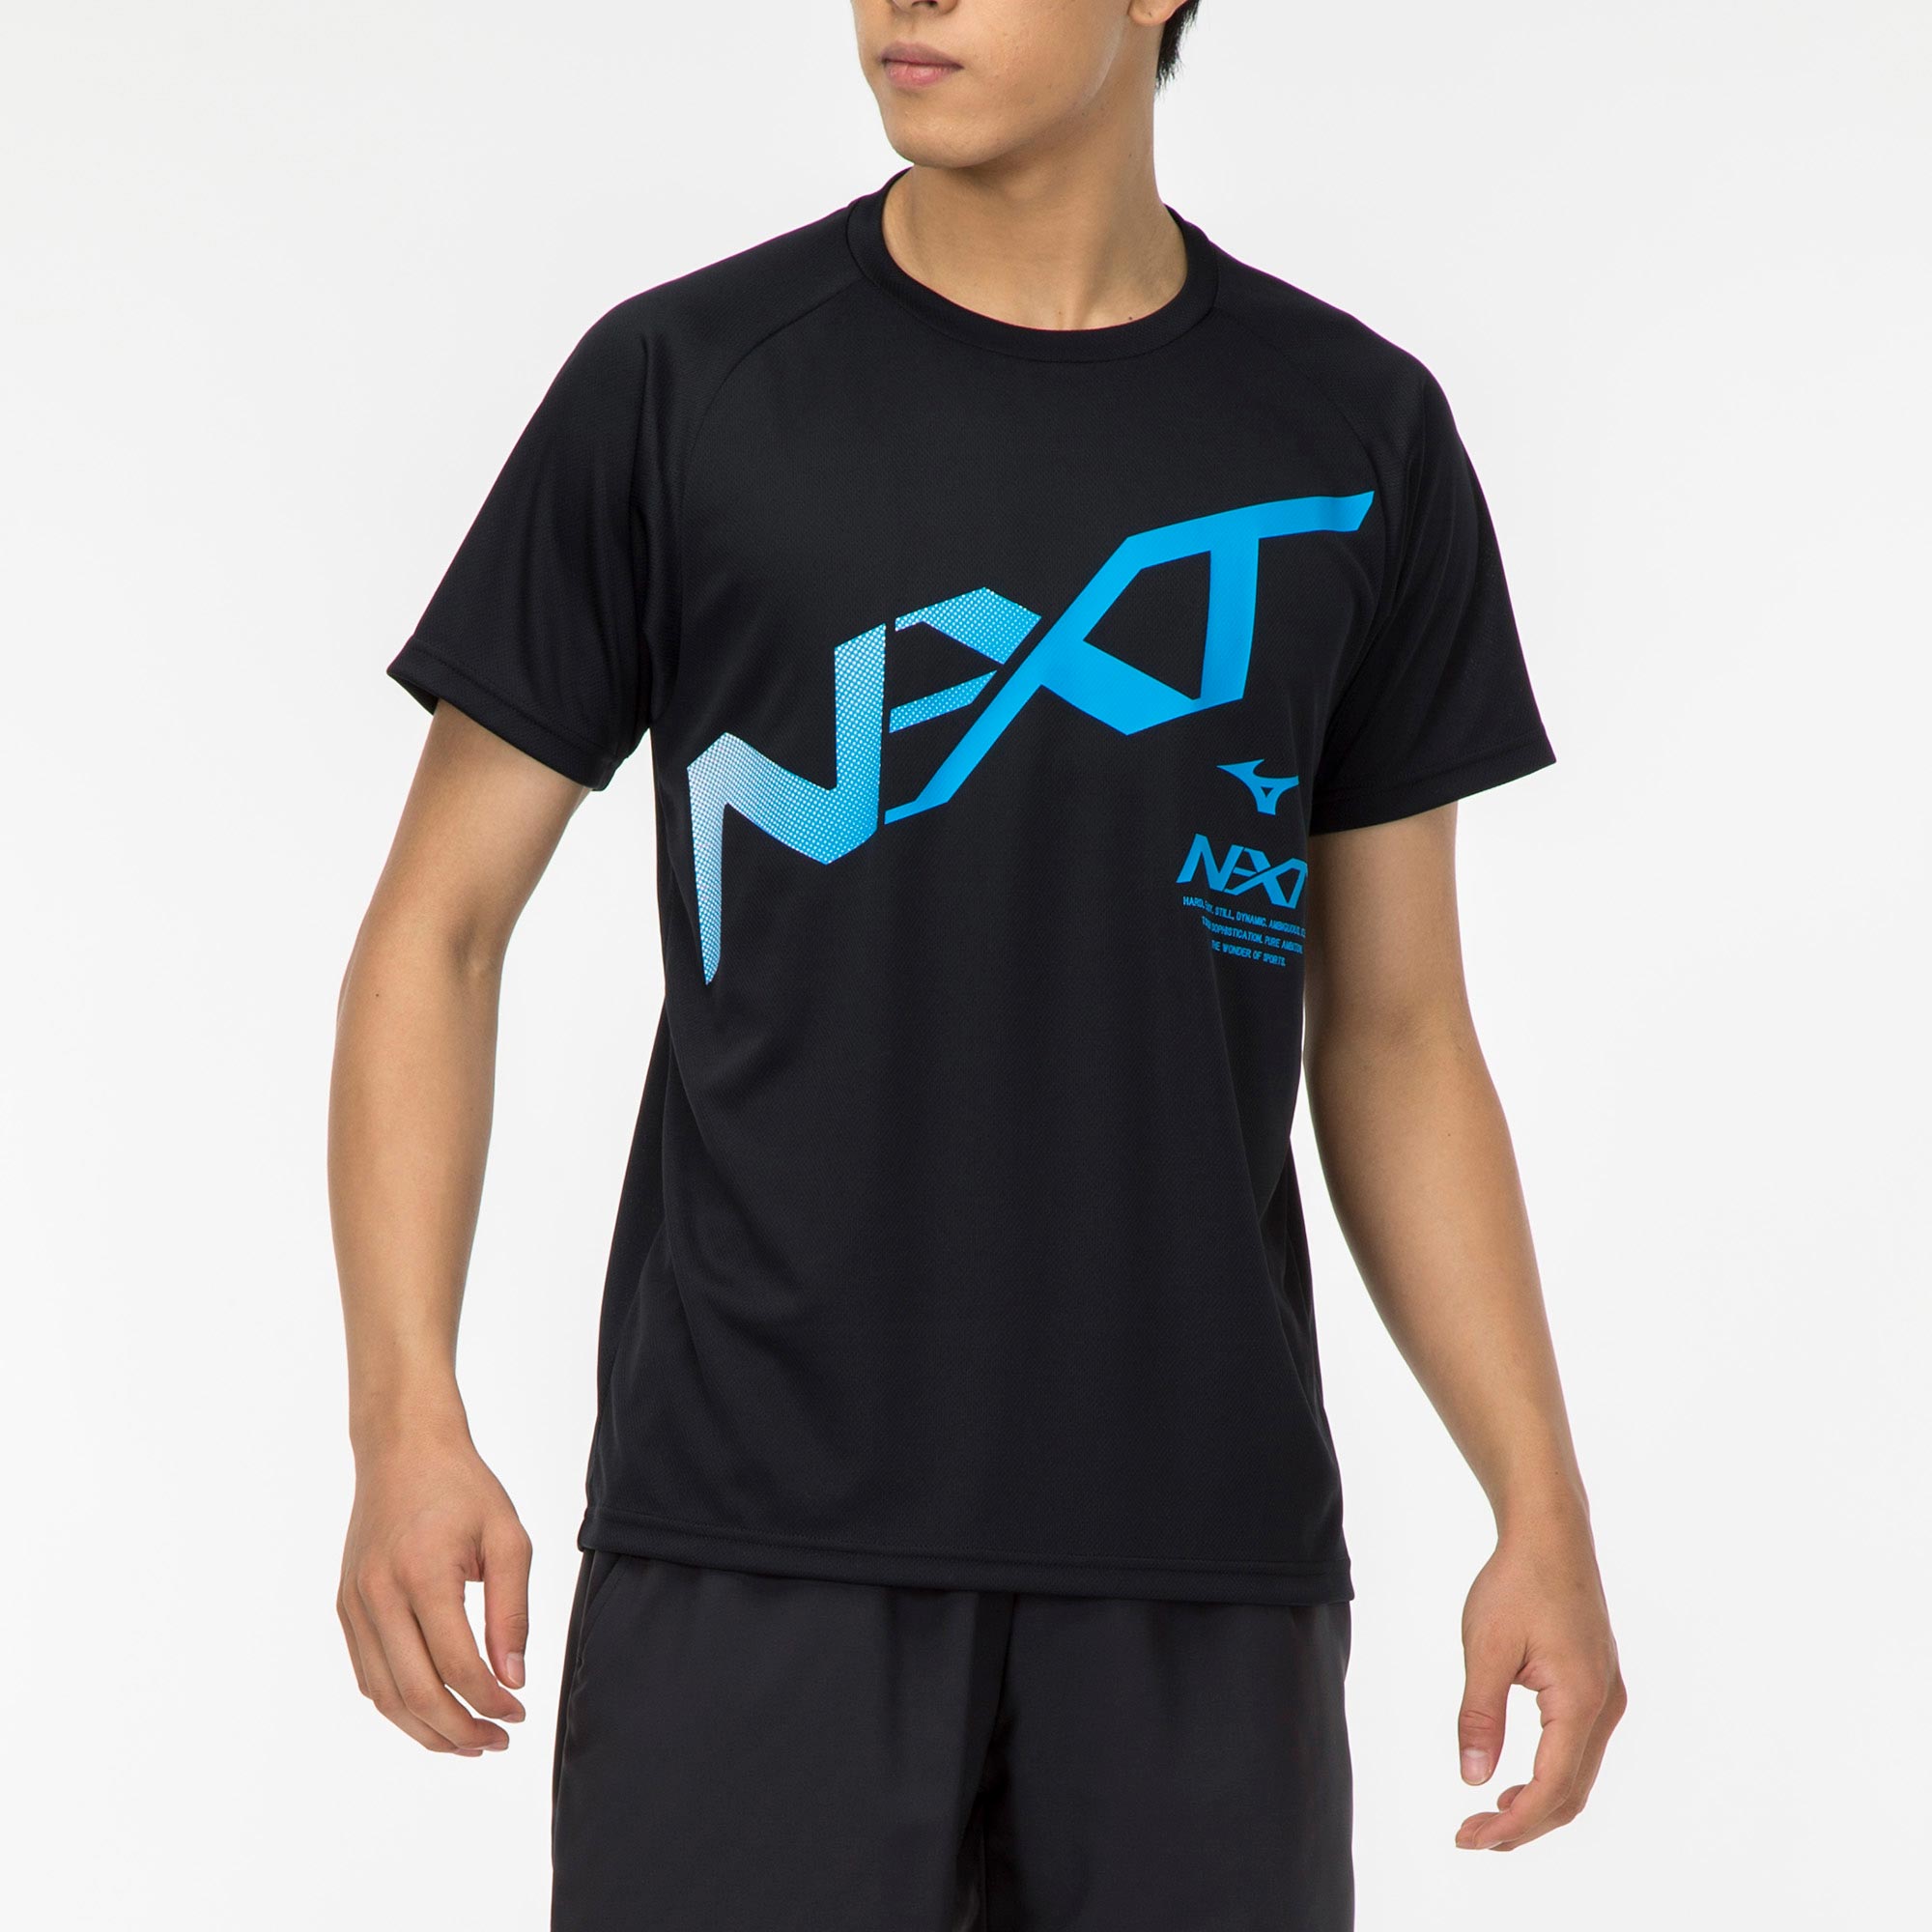 N-XT Tシャツ[ユニセックス]|32JA2215|ミズノトレーニング|トレーニングウエア|ミズノ公式オンライン